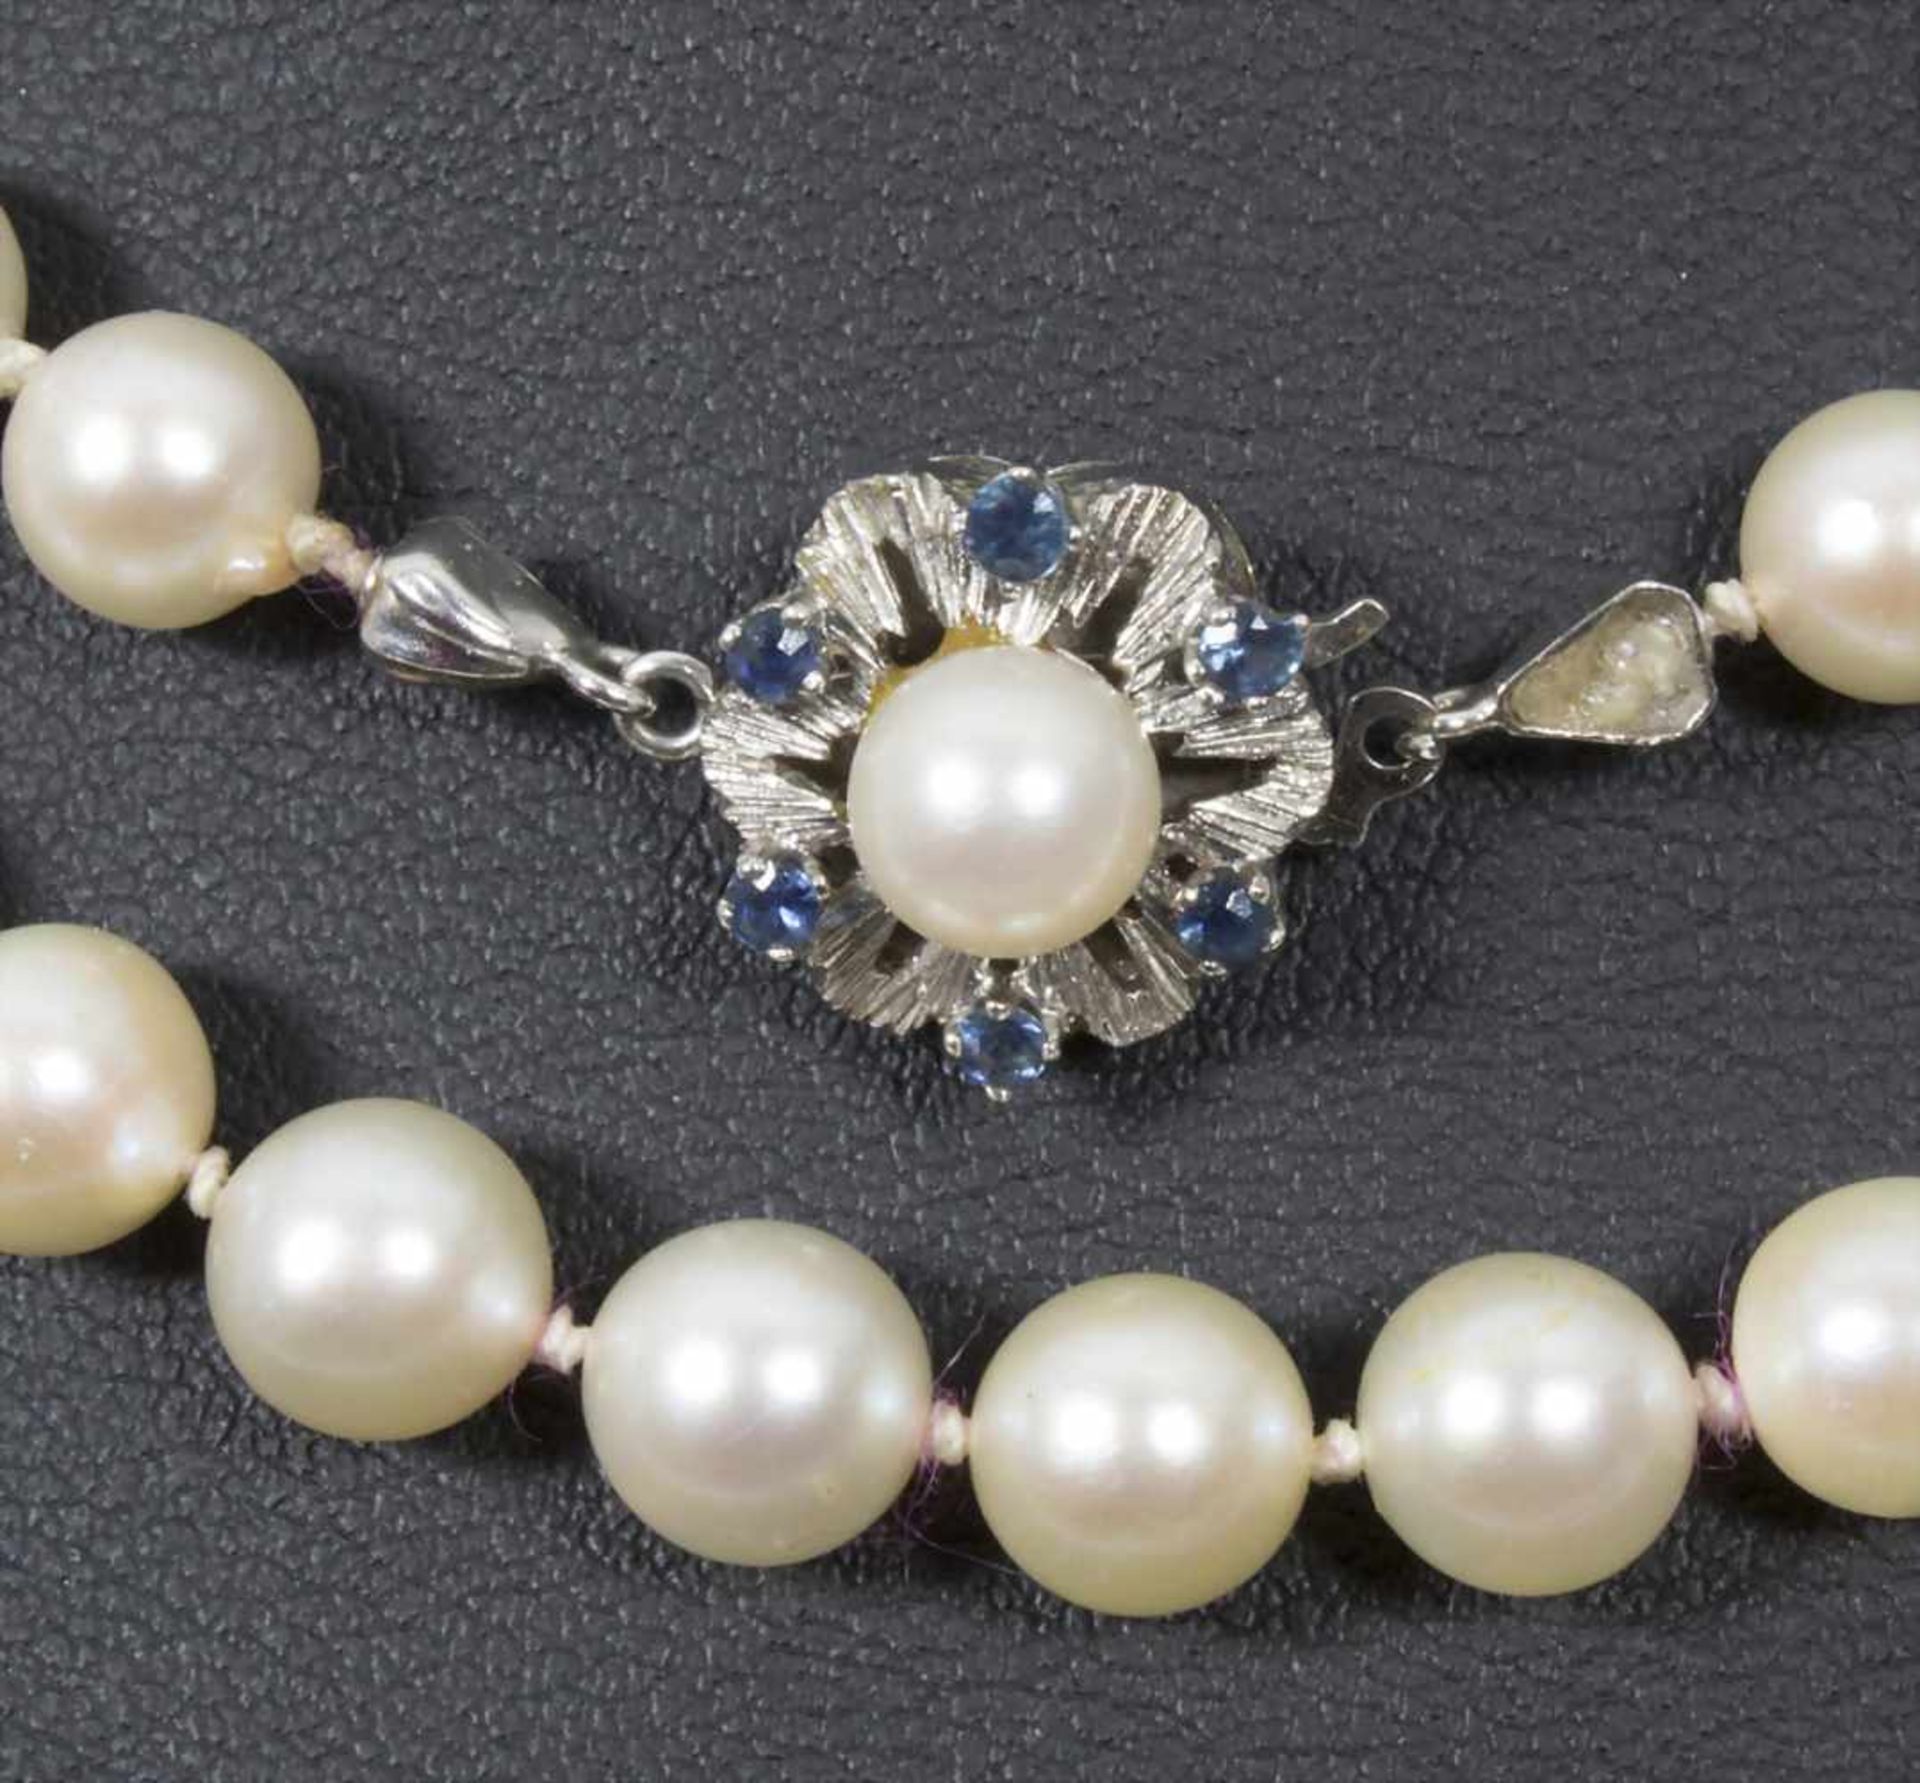 2 Perlenketten / Two pearl necklacesMaterial: Perlen einzeln geknotet, Verschluss Weißgold WG 585/ - Image 3 of 5